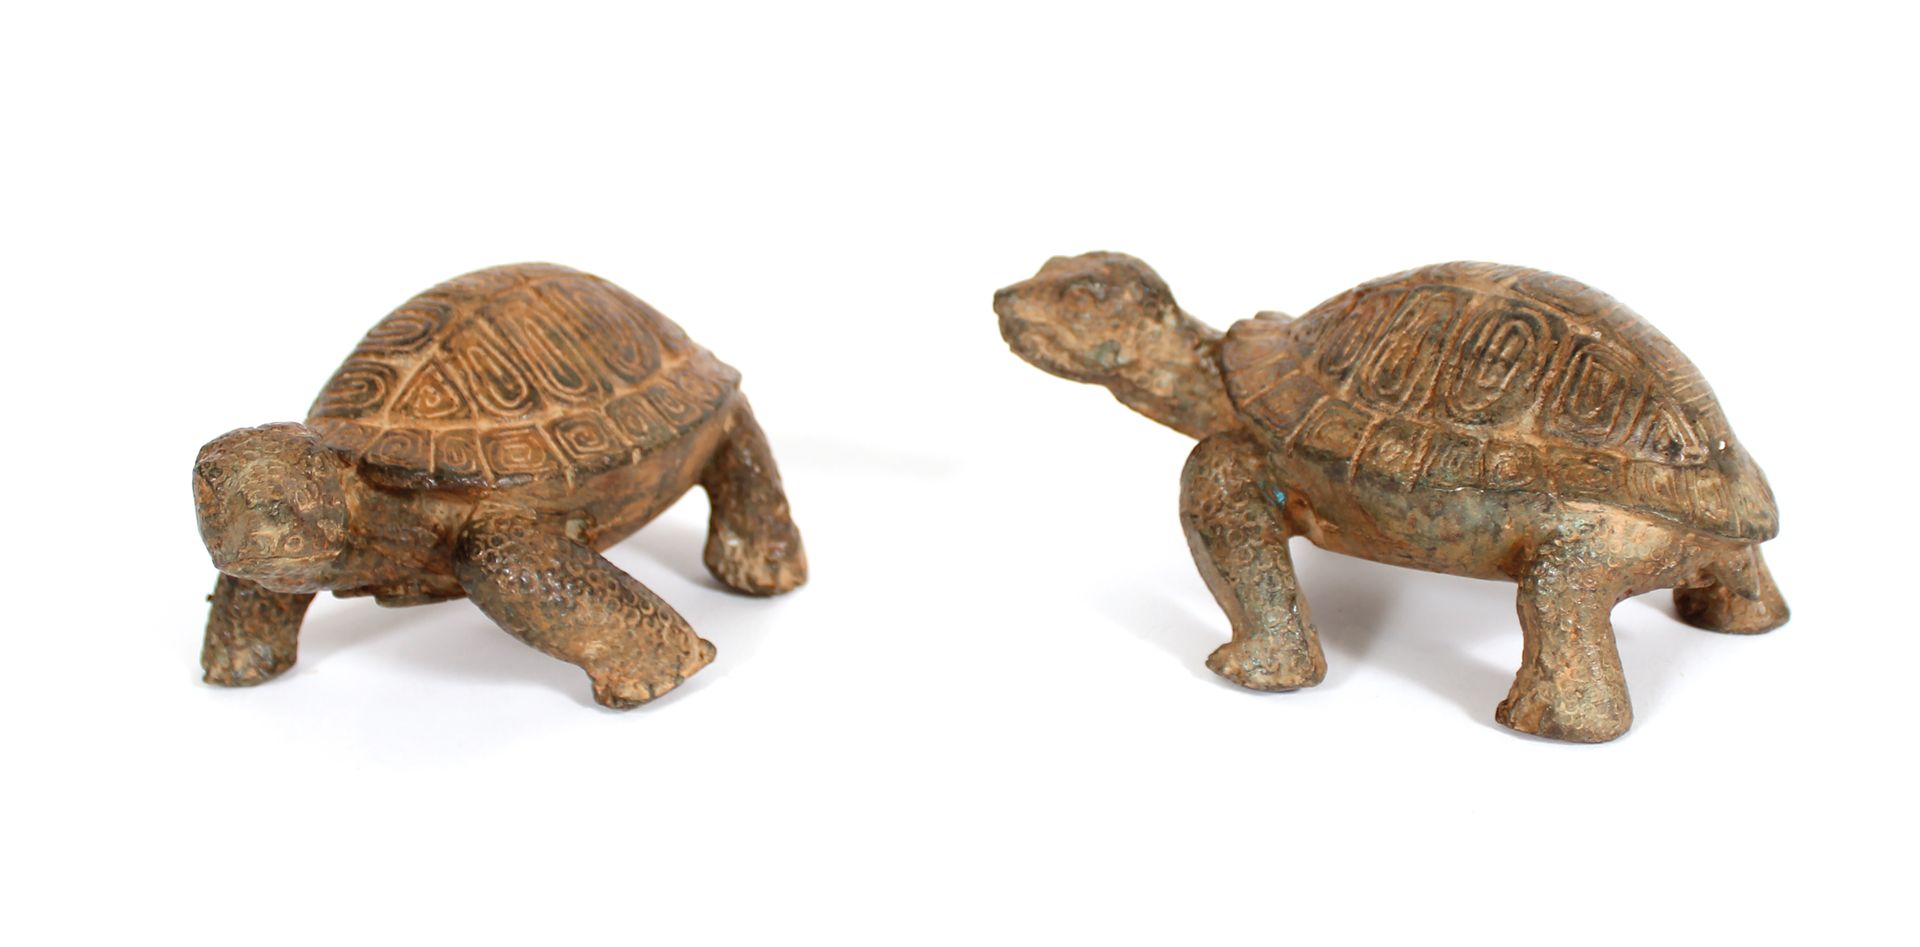 Null Pierre CHENET (20th century school)
Pair of turtles
Brown patina bronze wit&hellip;